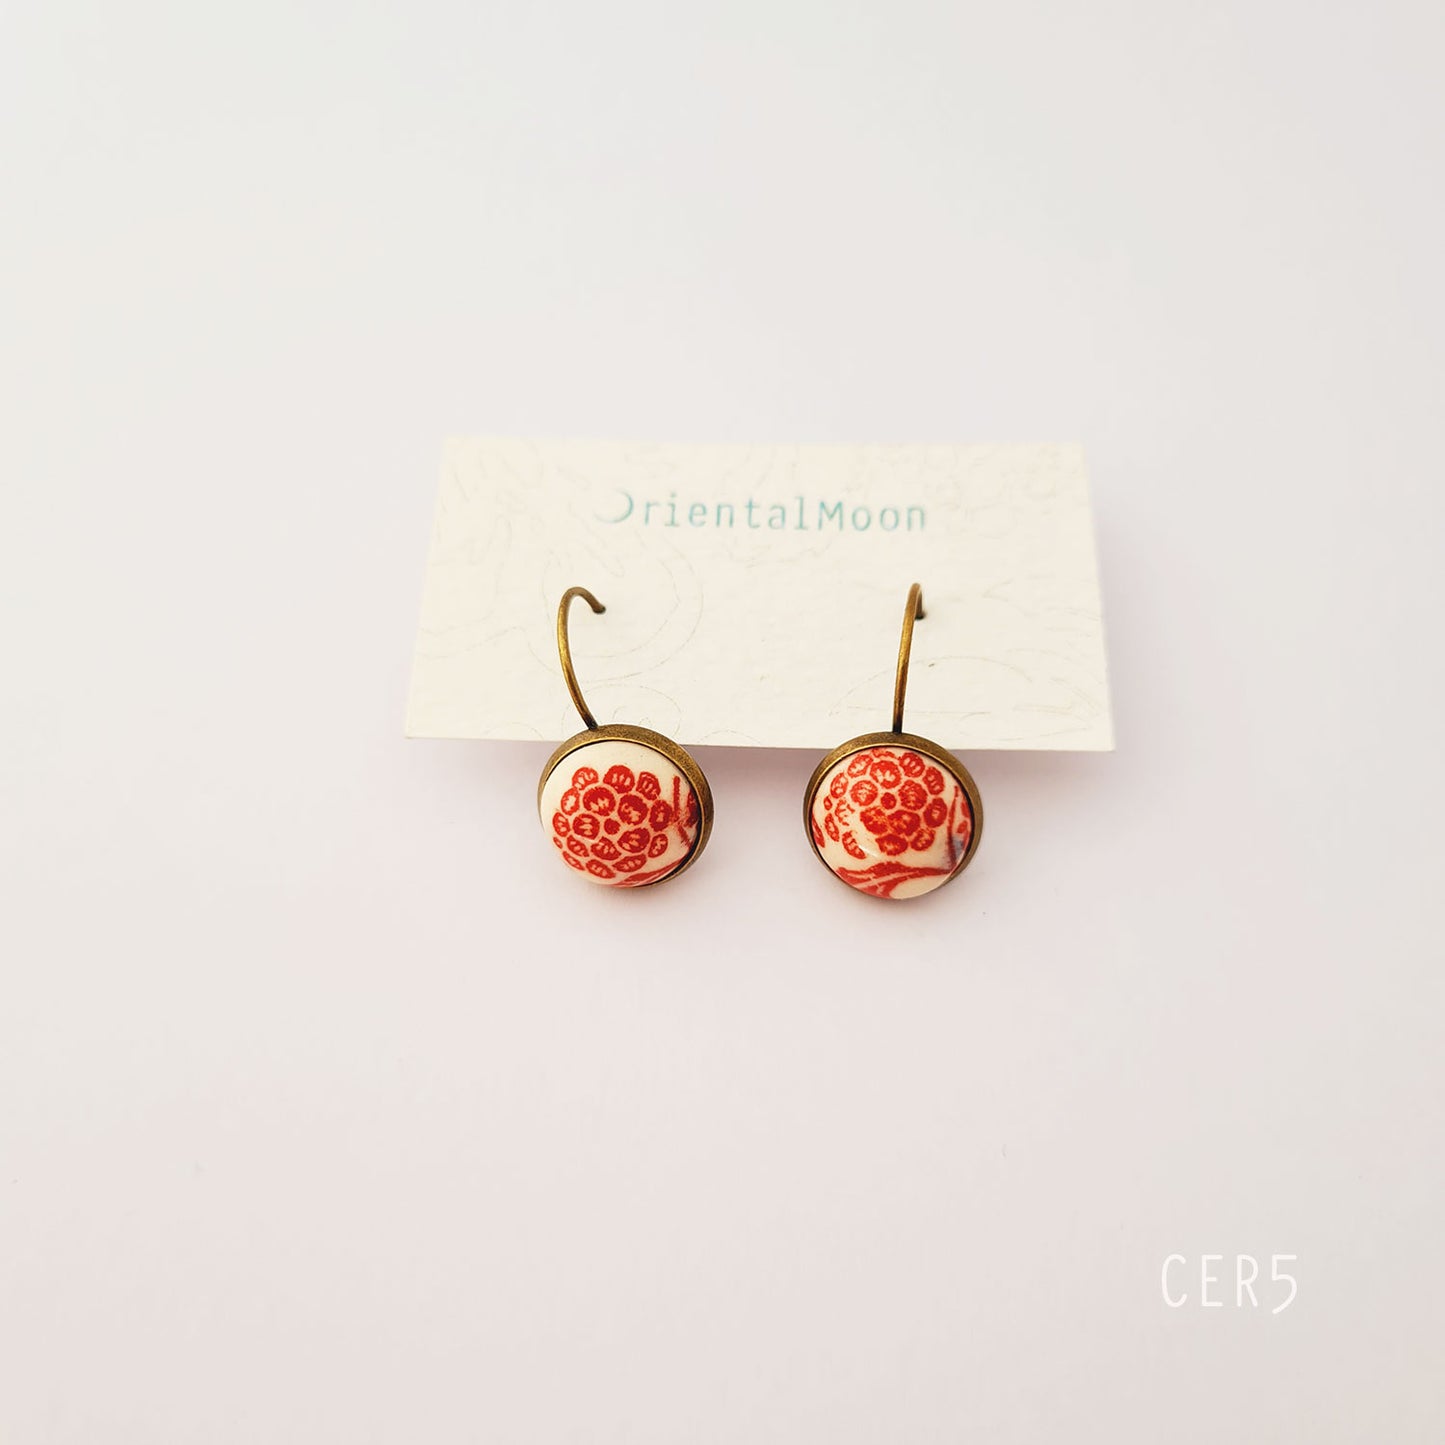 Red & White ceramic pendant set with earrings OM01 ชุดสร้อยคอจี้เซรามิคพร้อมต่างหู